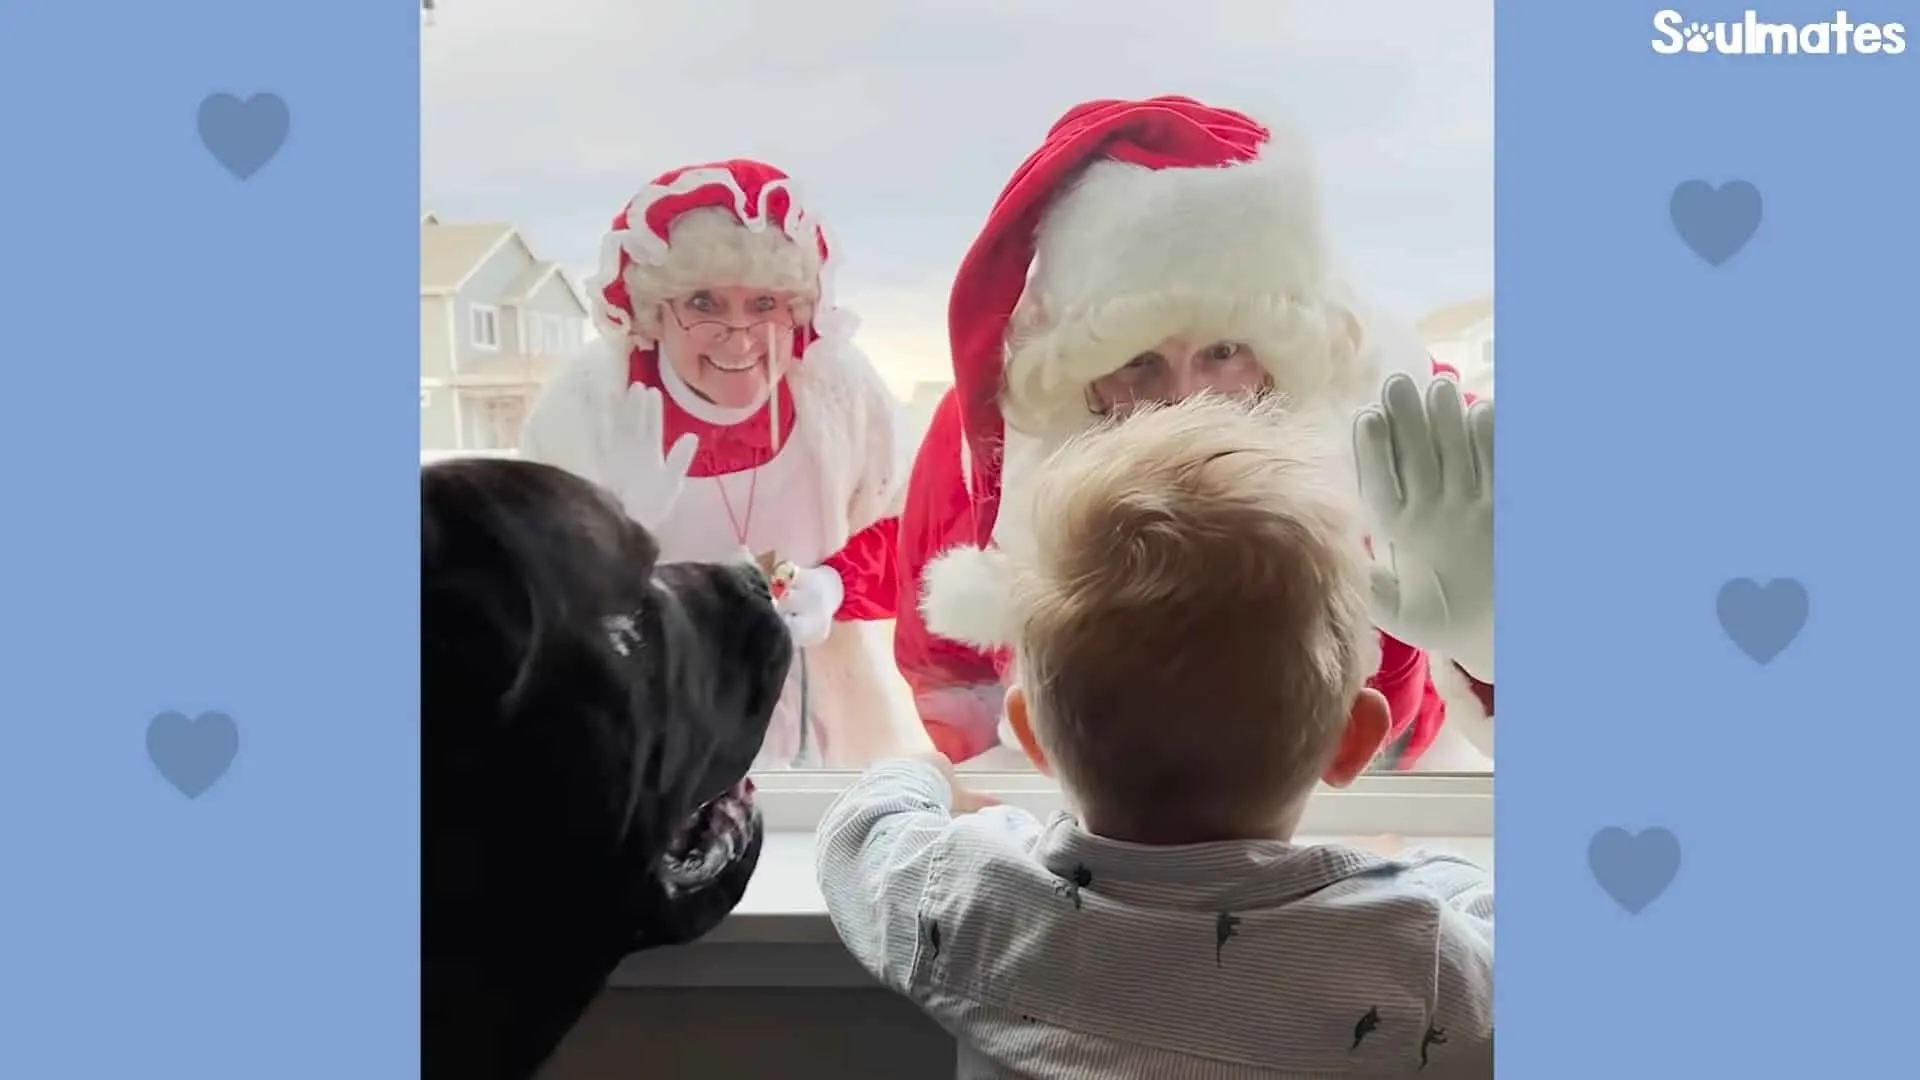 Drax and baby watch Santa Claus